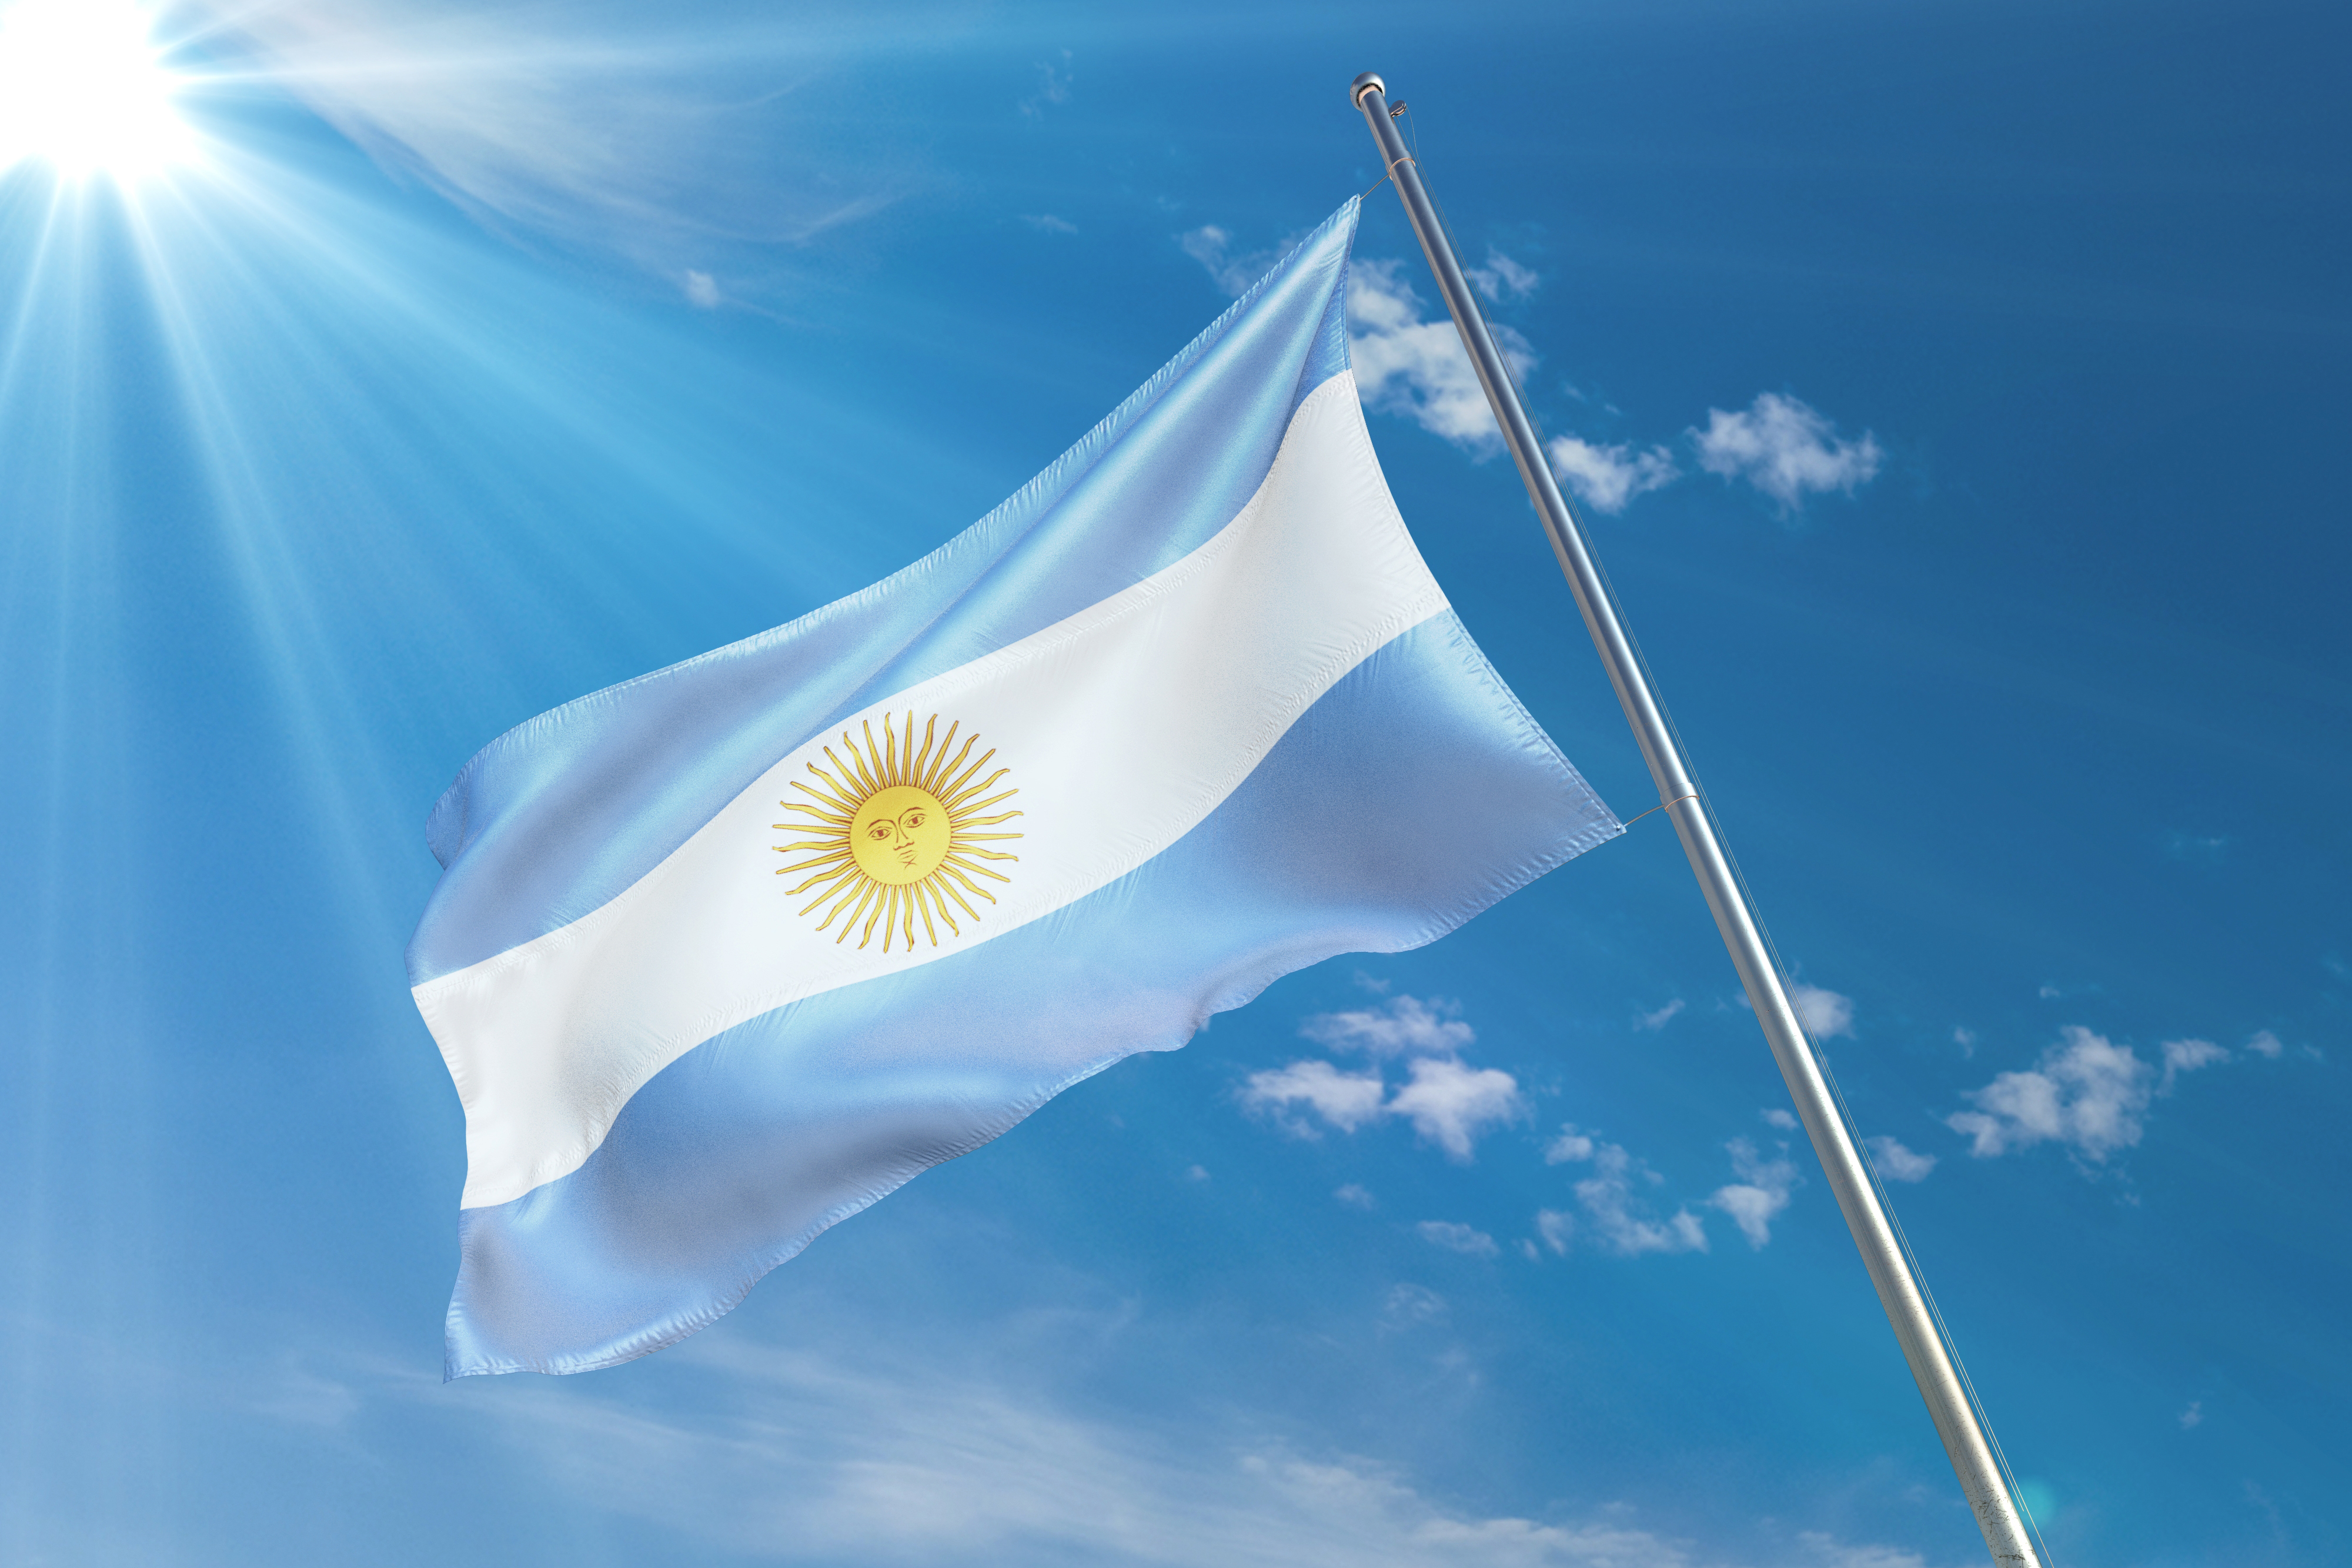 The flag symbolizes the citizenship of Argentina